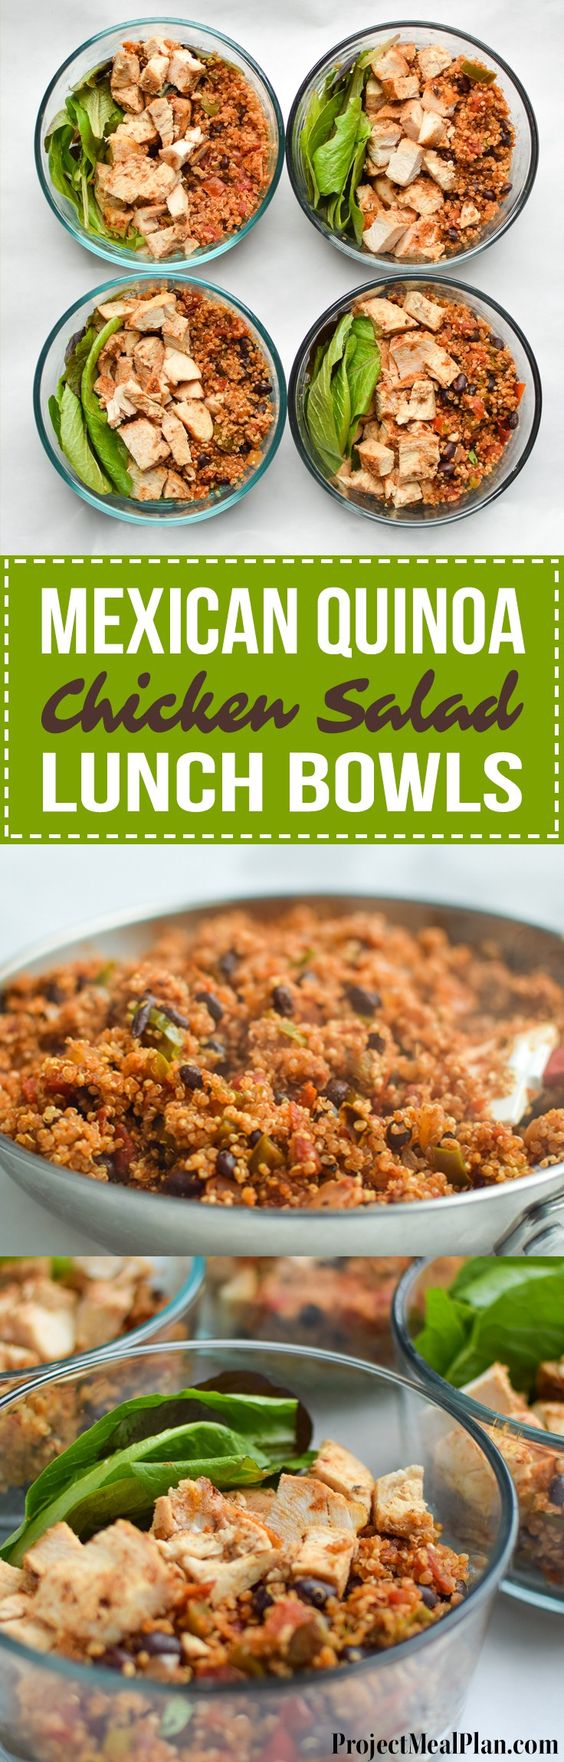 Mexican Quinoa Chicken Salad Lunch Bowls